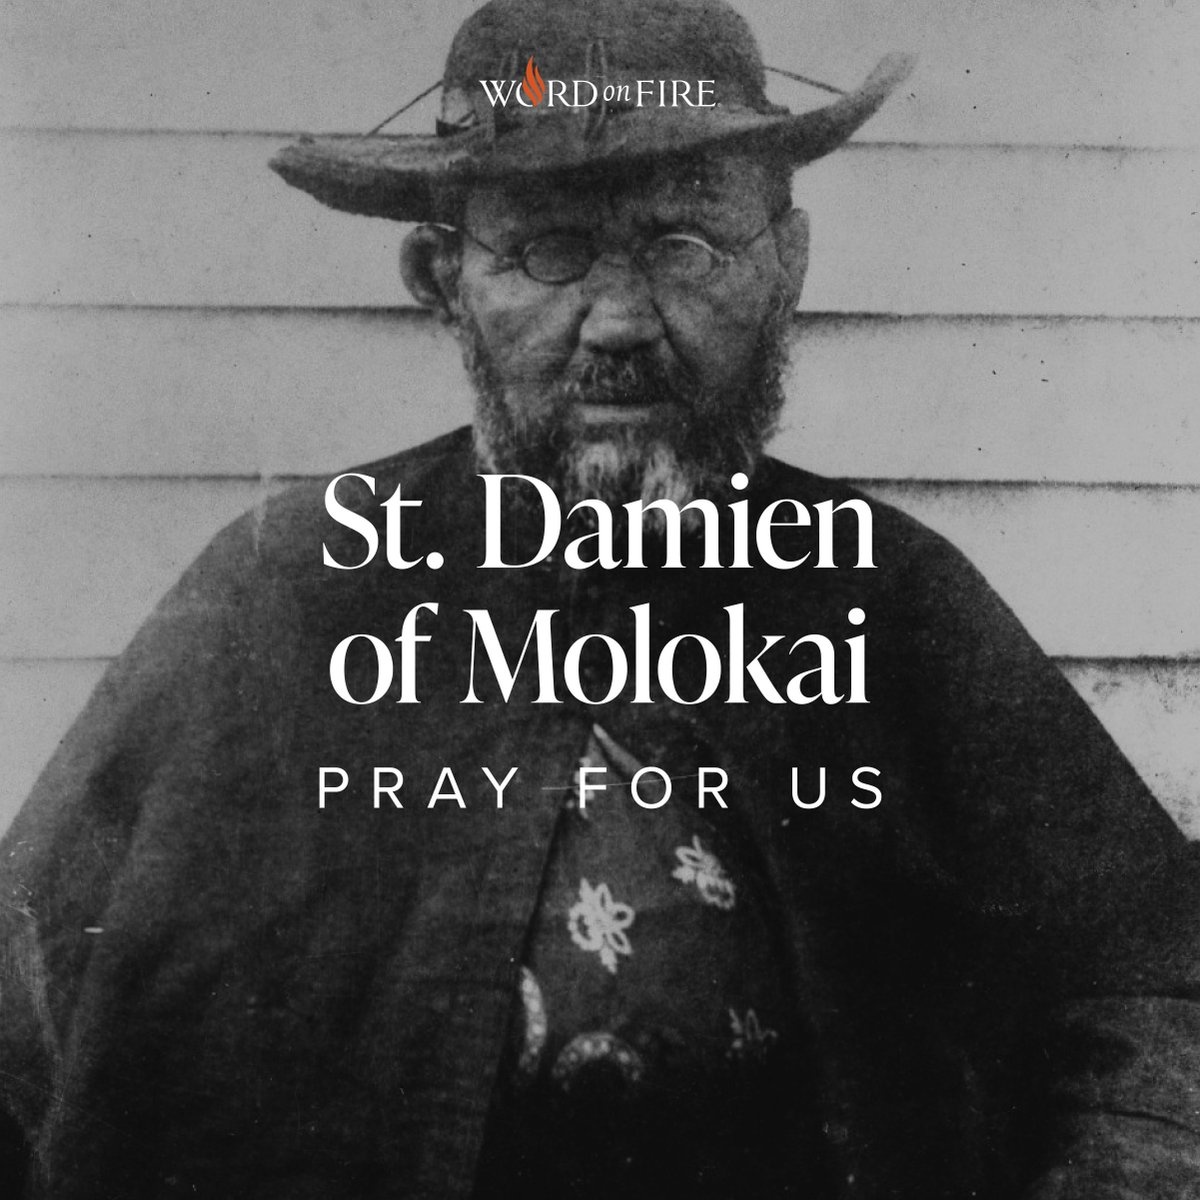 St. Damien of Molokai, pray for us!